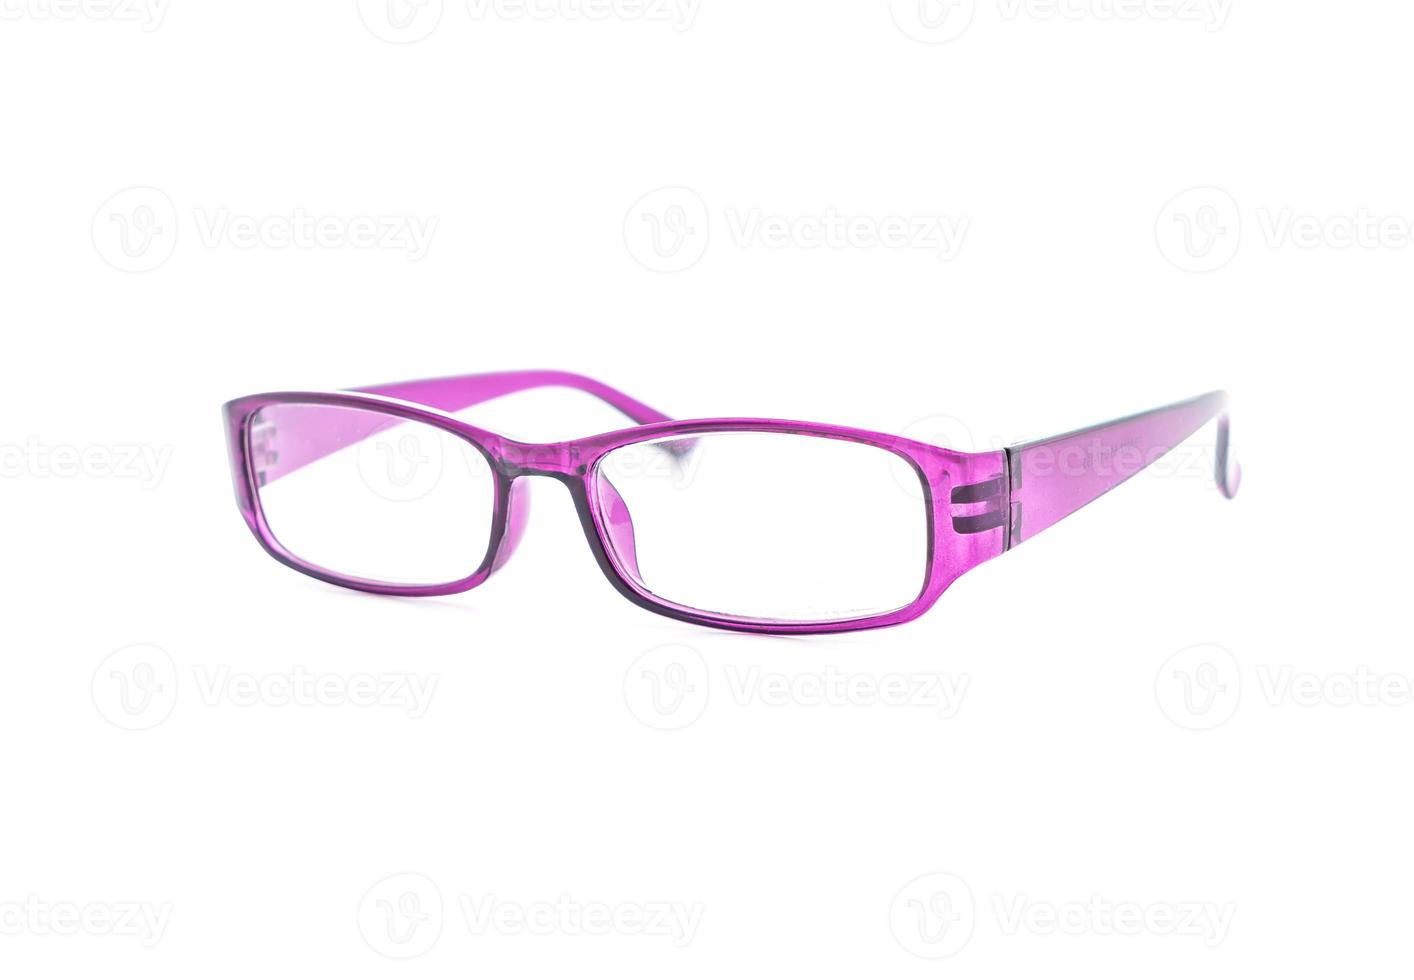 bril, bril of bril op witte achtergrond foto